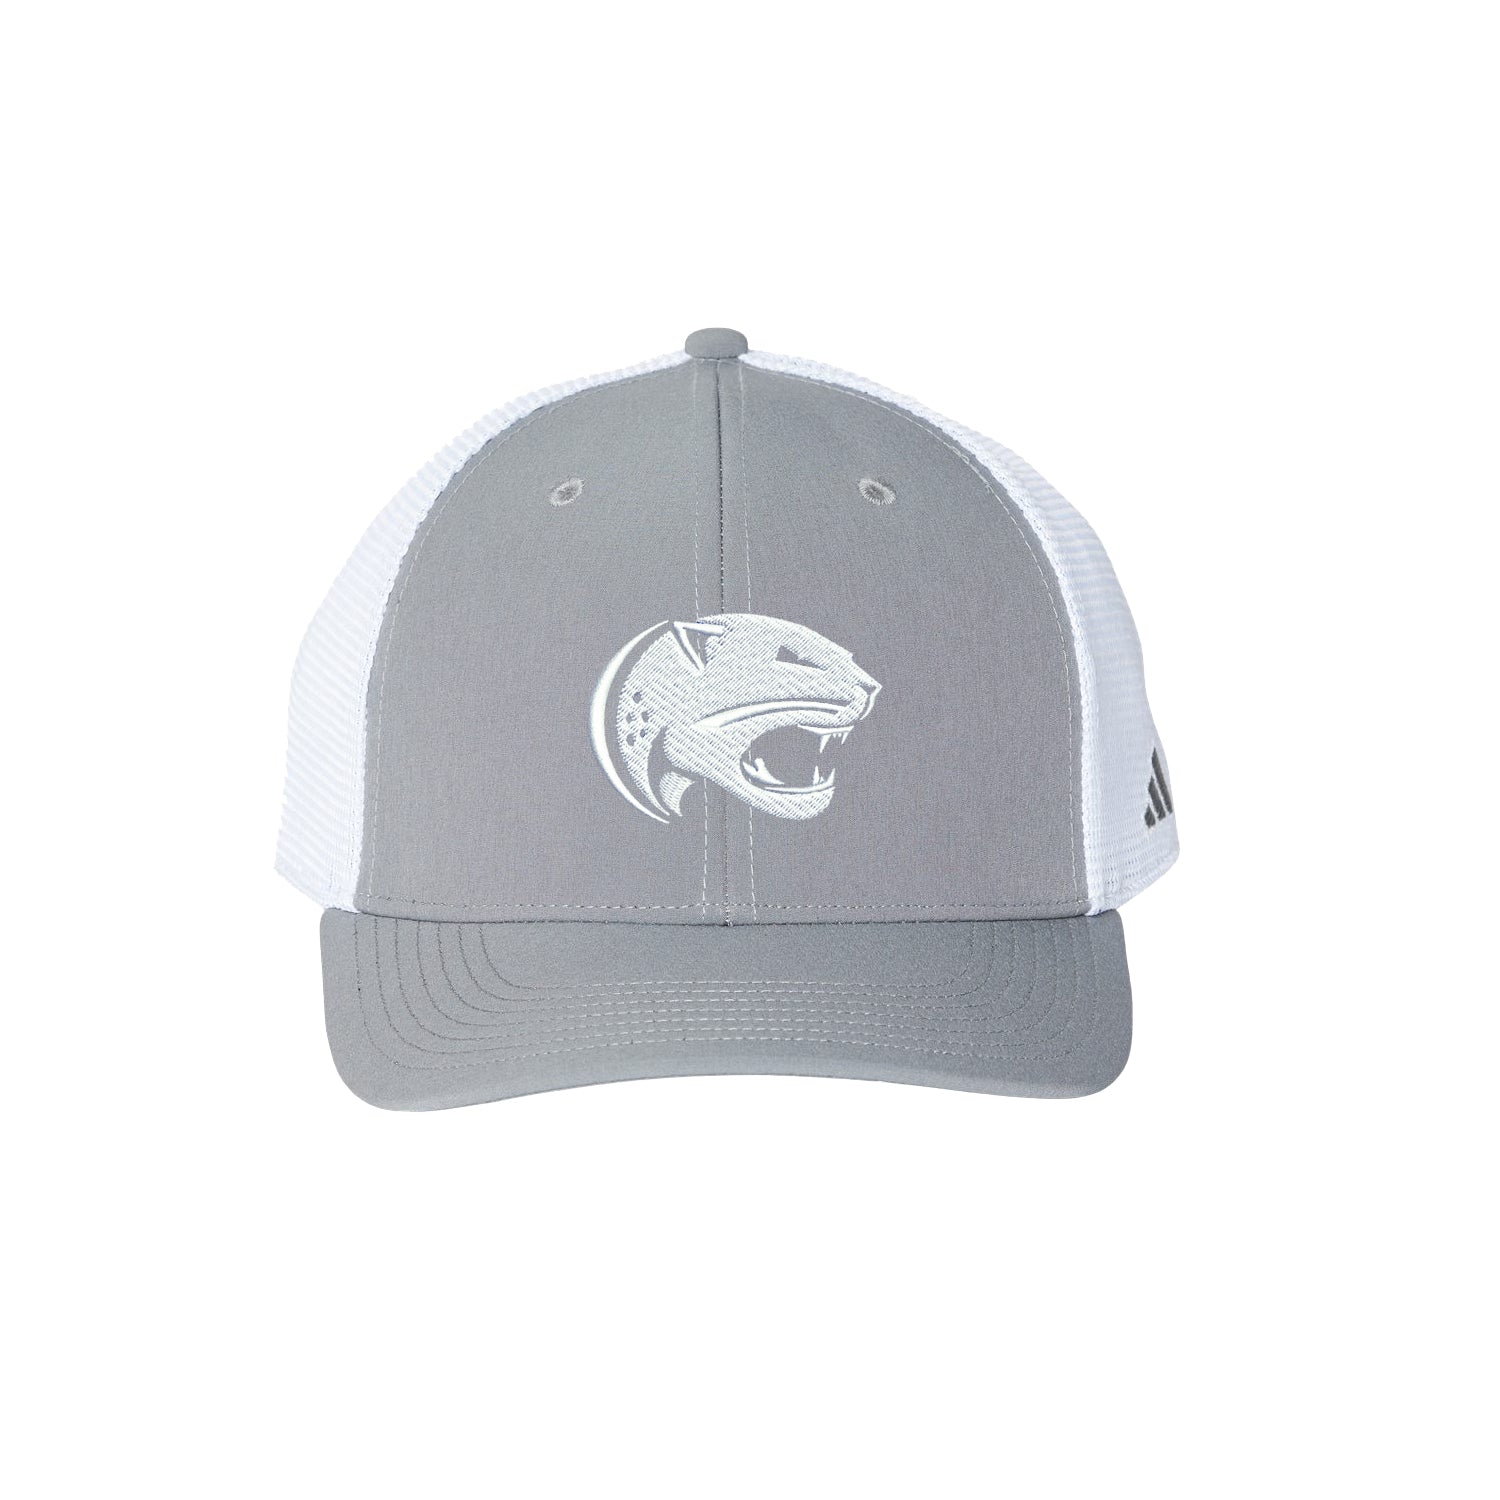 University of South Alabama Adidas Sustainable Trucker Cap - Jaguar Logo Grey with White Jaguar